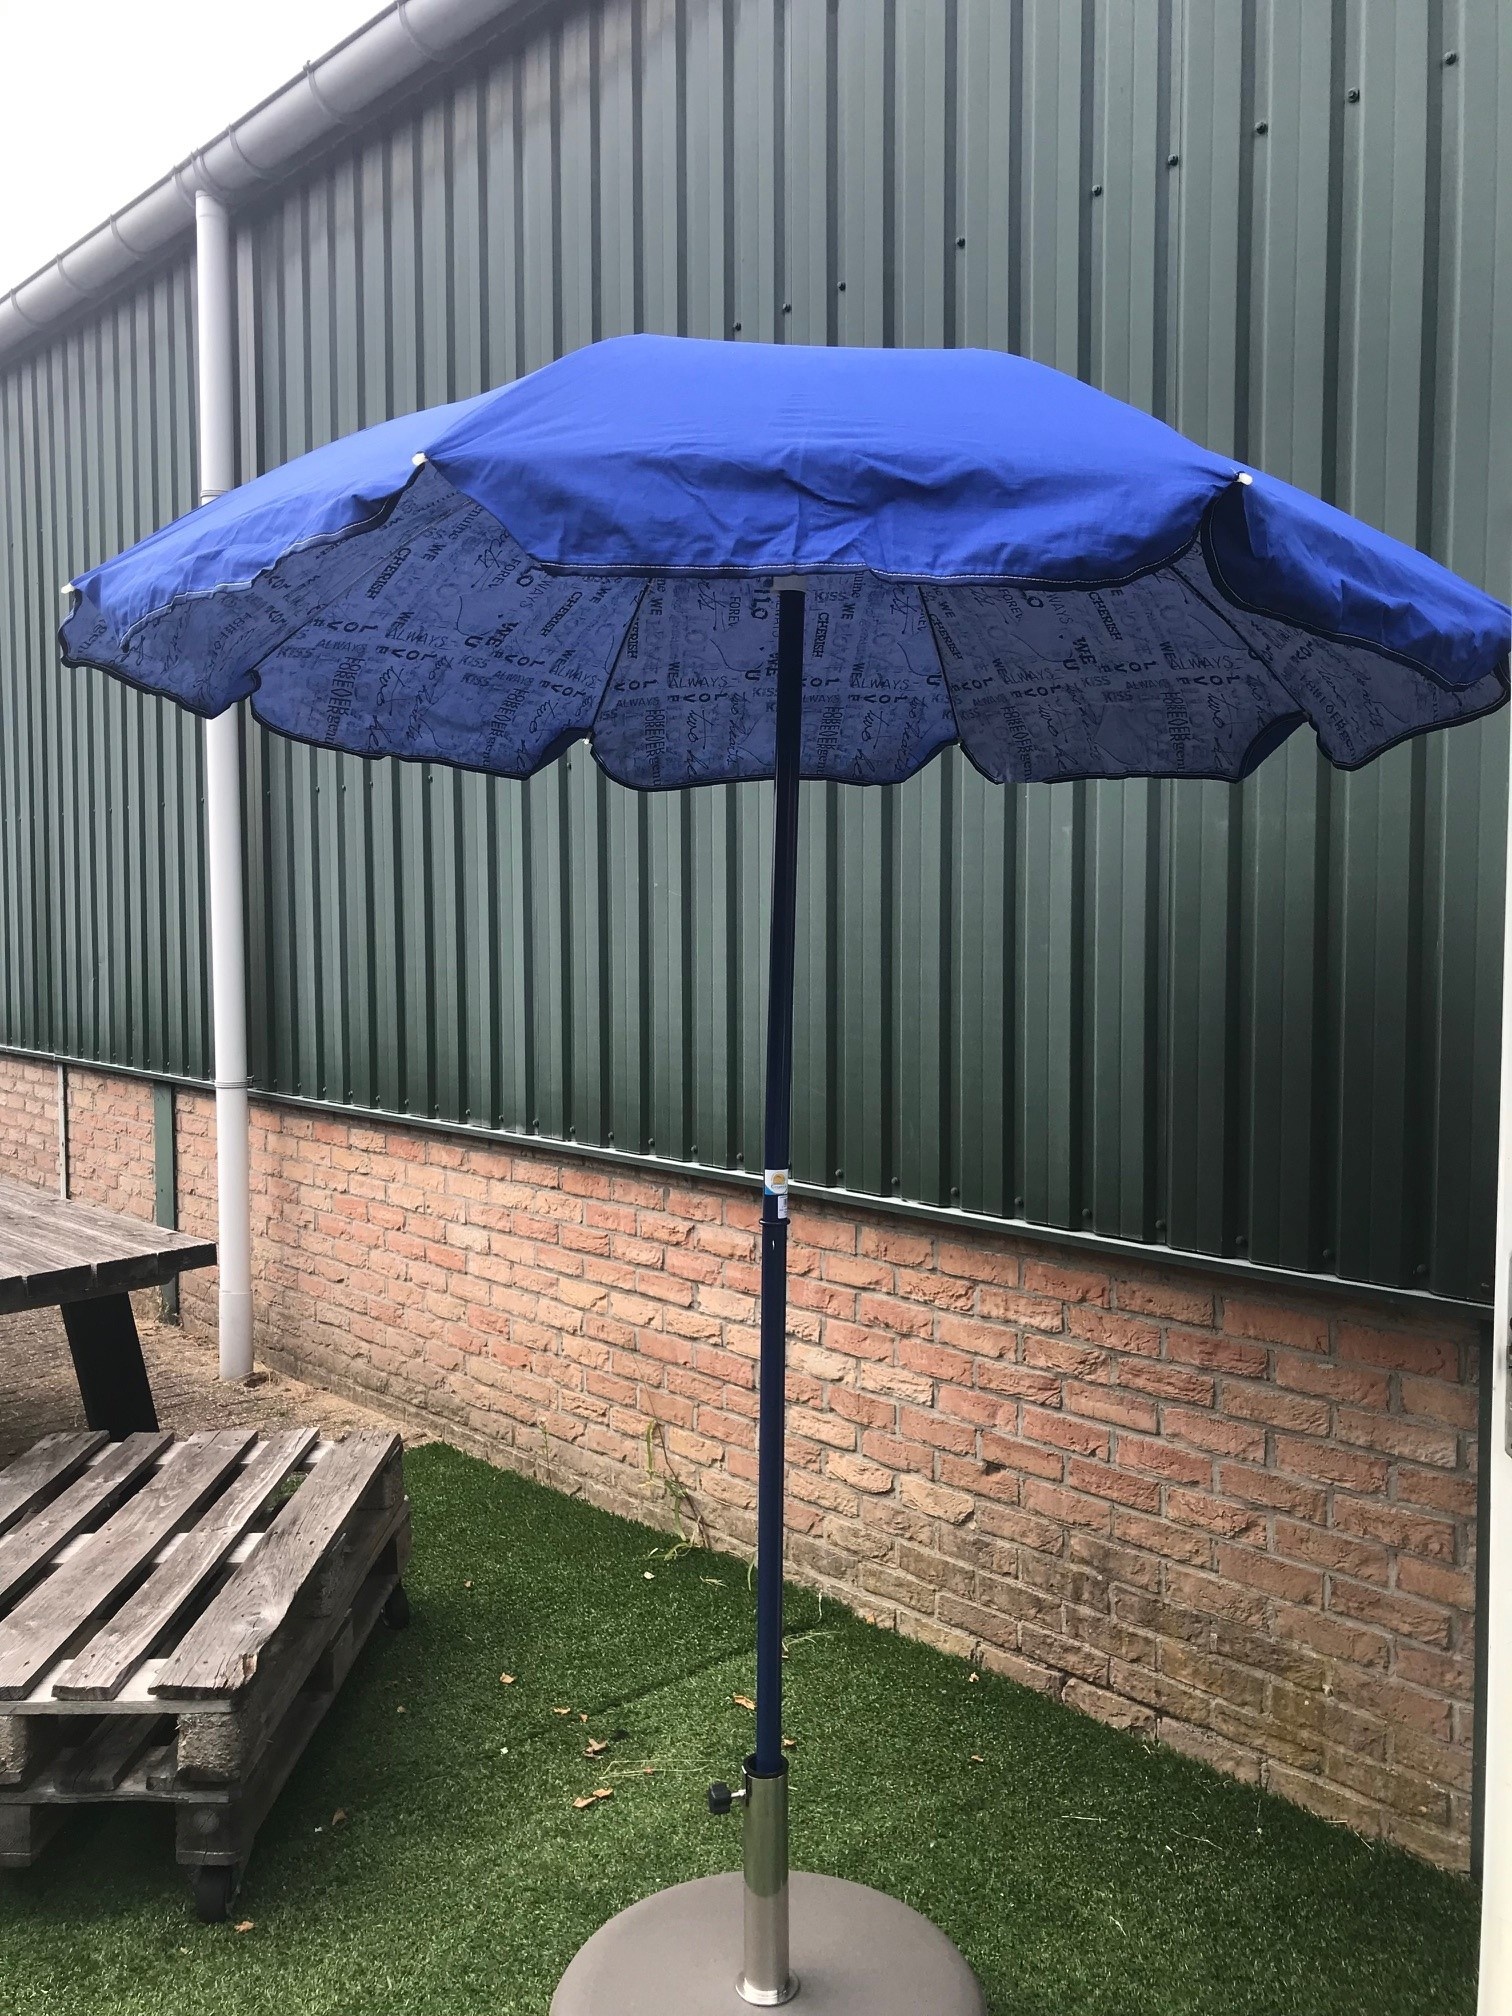 Parasol kopen? ligbedshop.nl -